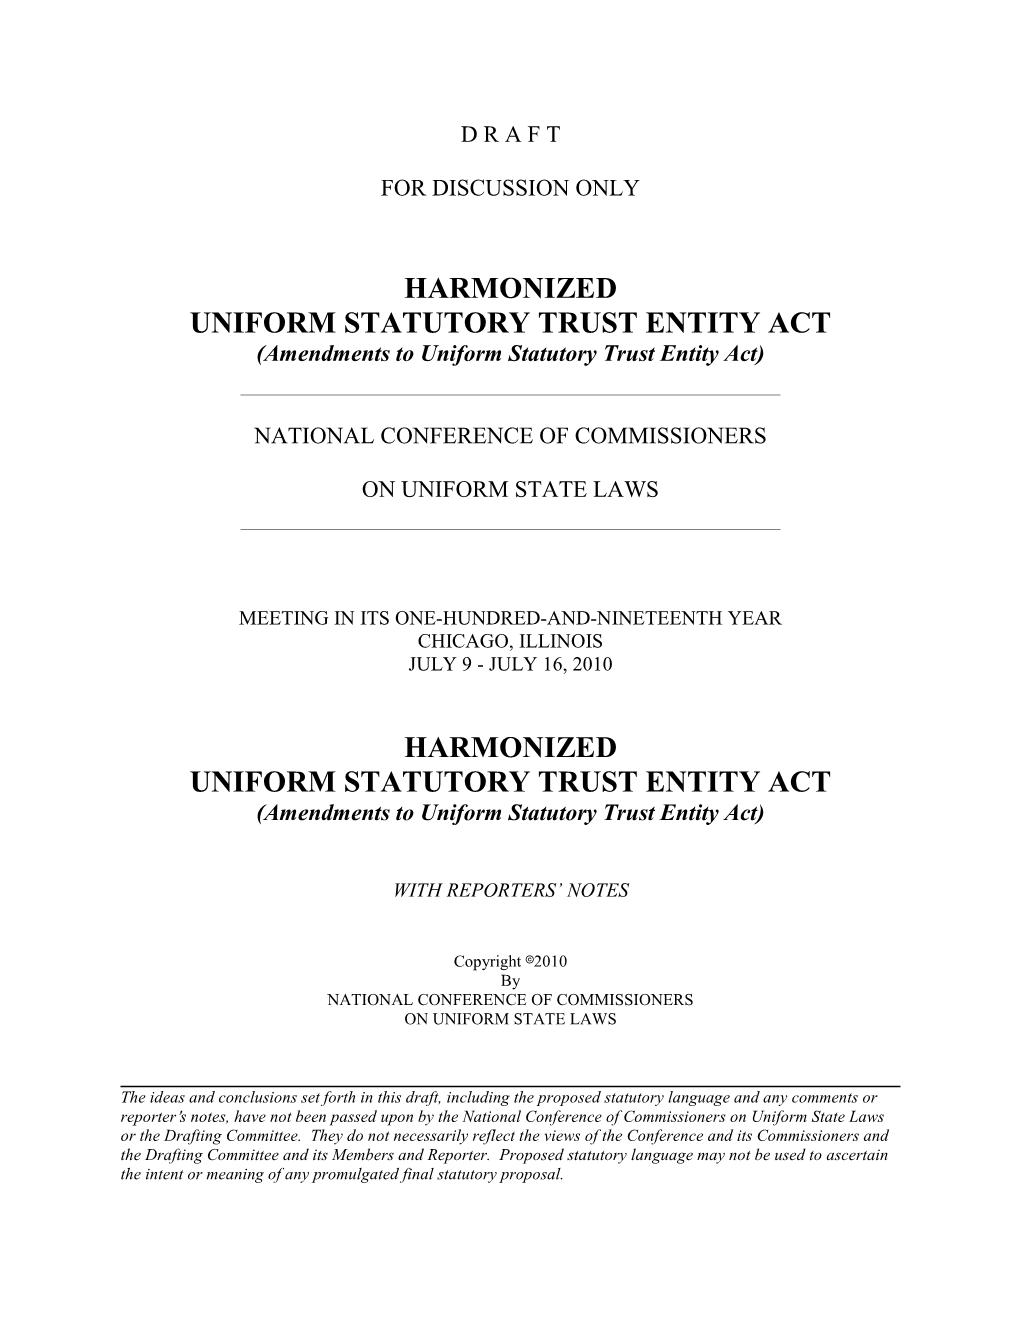 HARMONIZED UNIFORM STATUTORY TRUST ENTITY ACT (Amendments to Uniform Statutory Trust Entity Act)